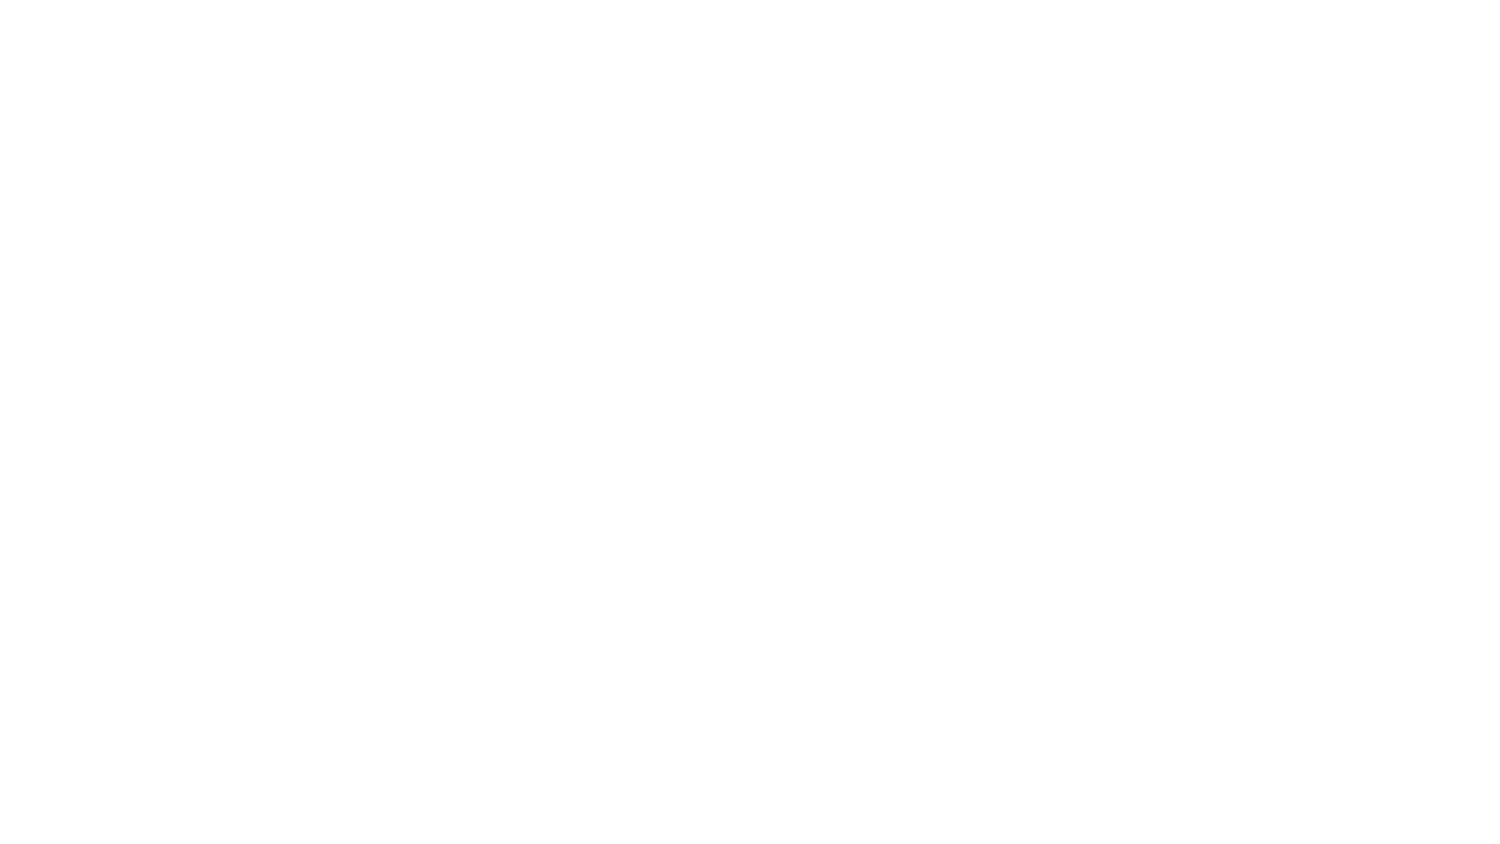 P7 Autoworks